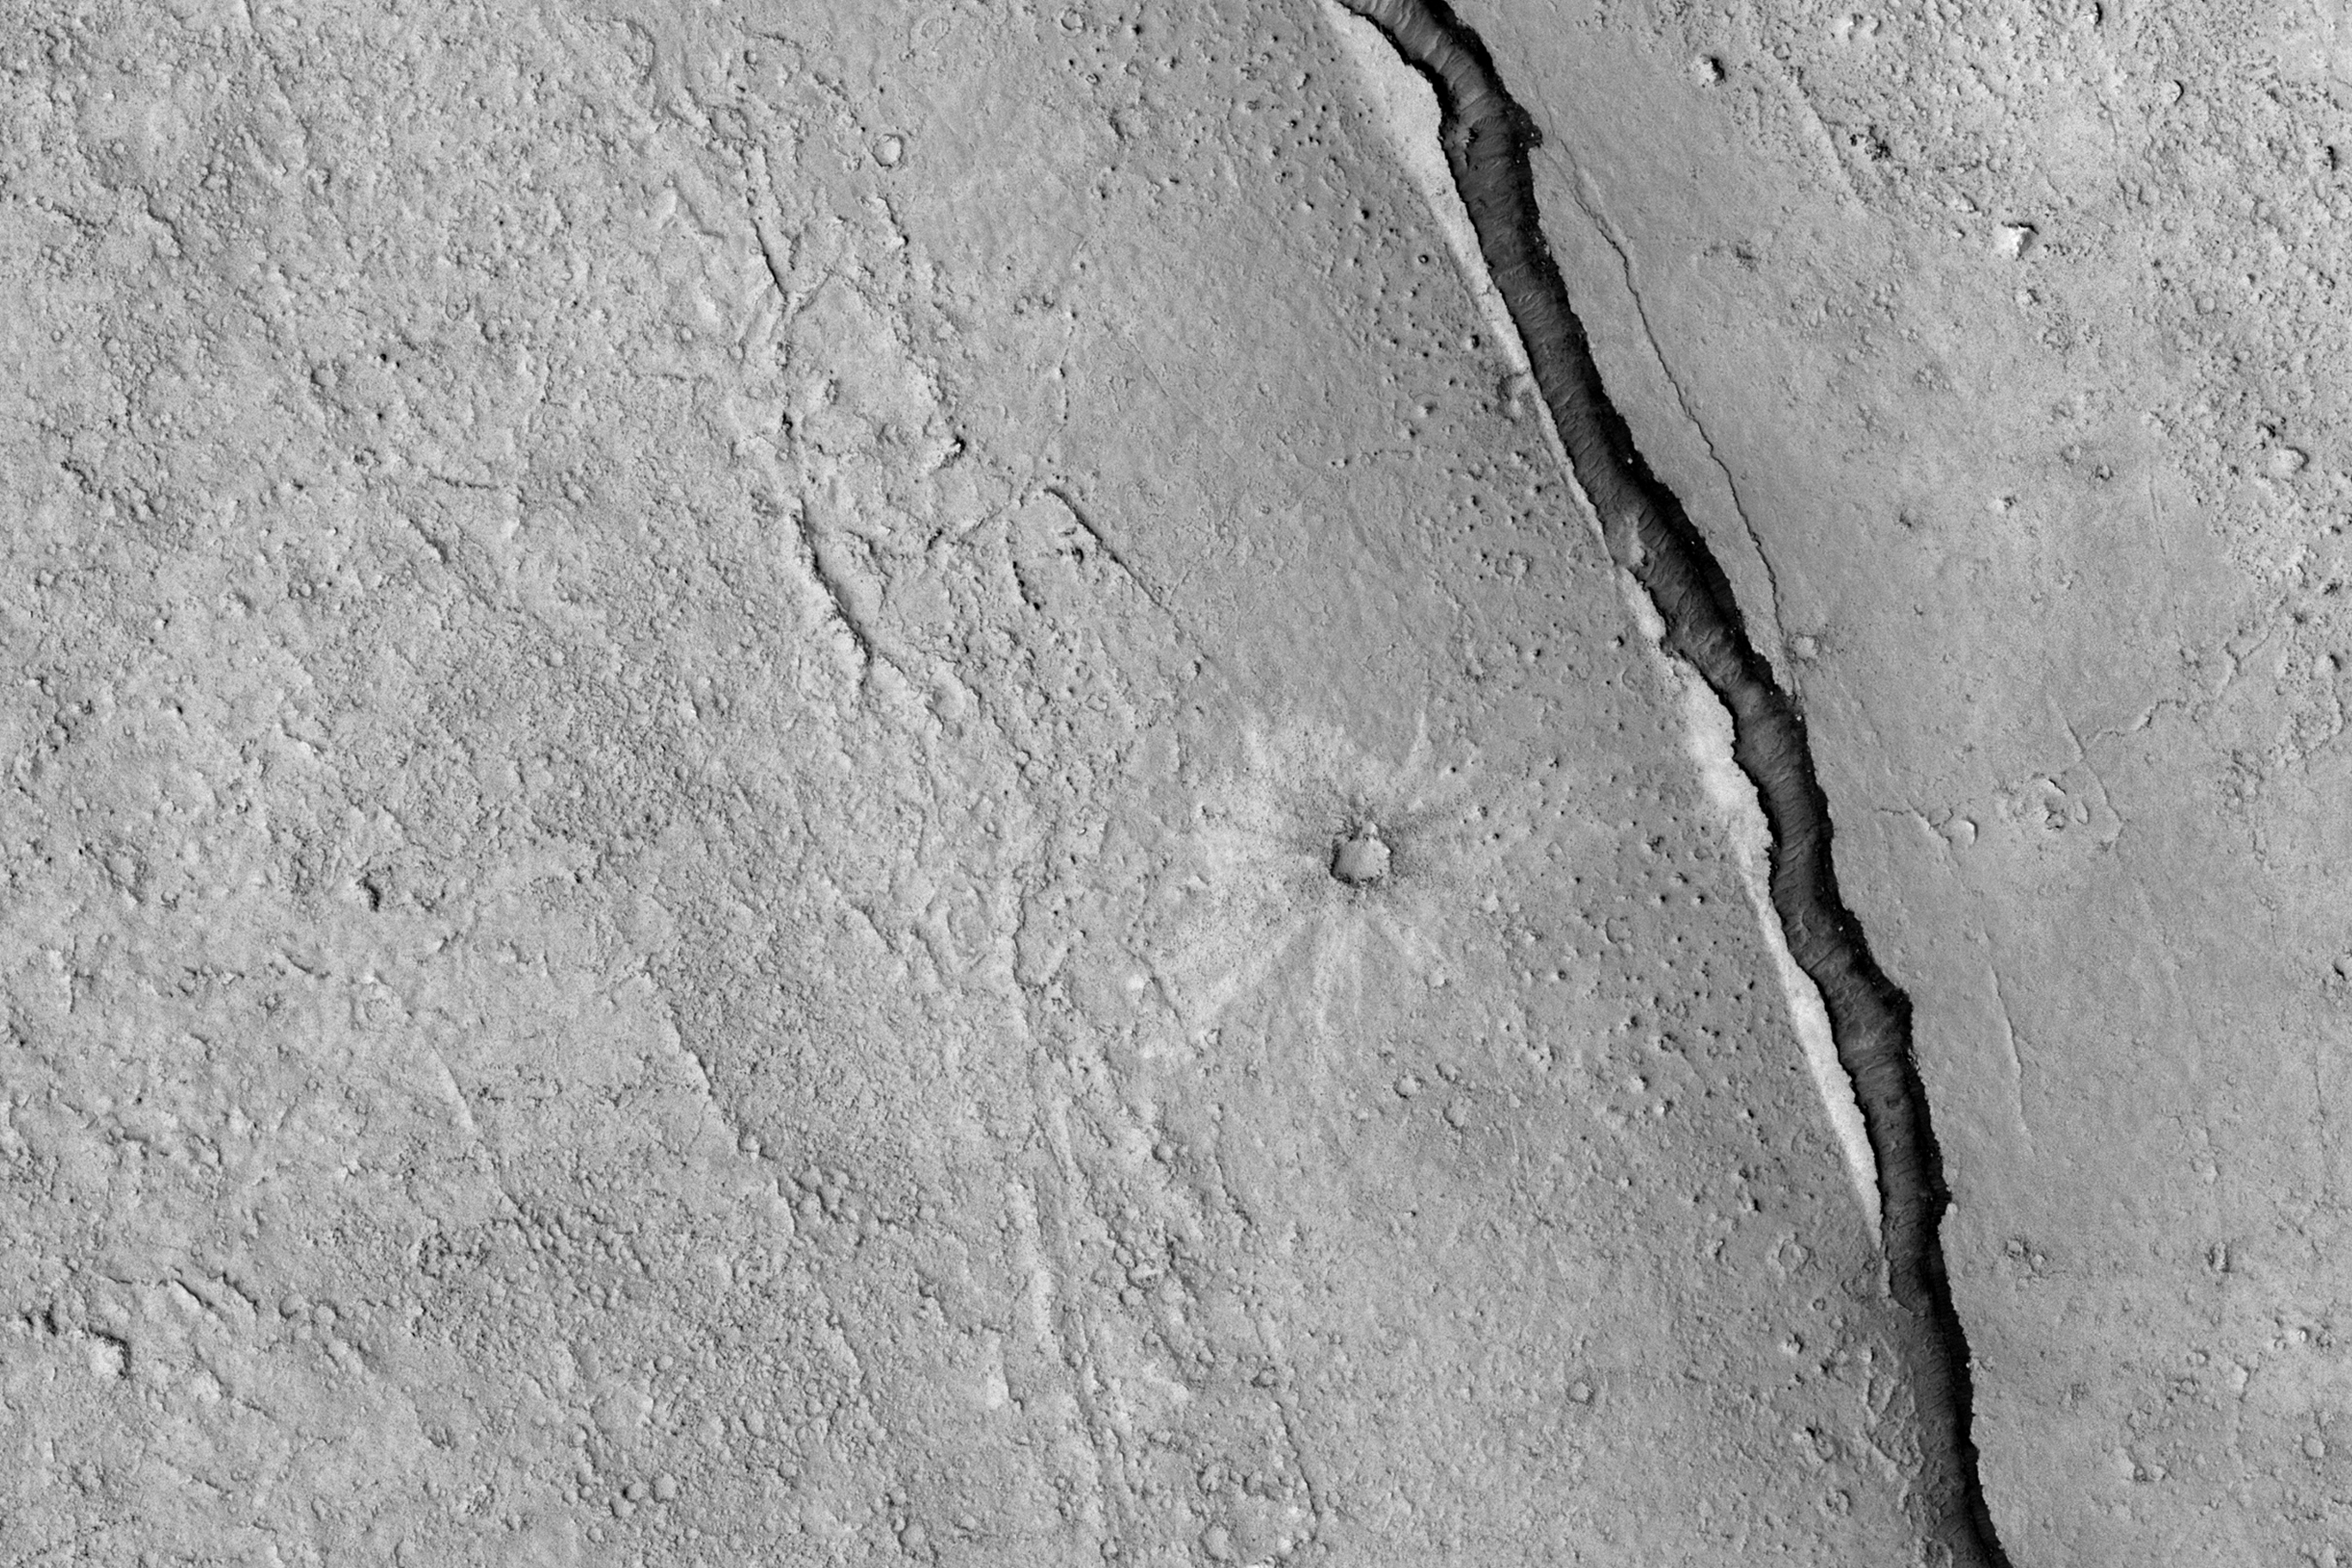 HiRISE | It Shrinks! It Cracks! (ESP_049723_1880)